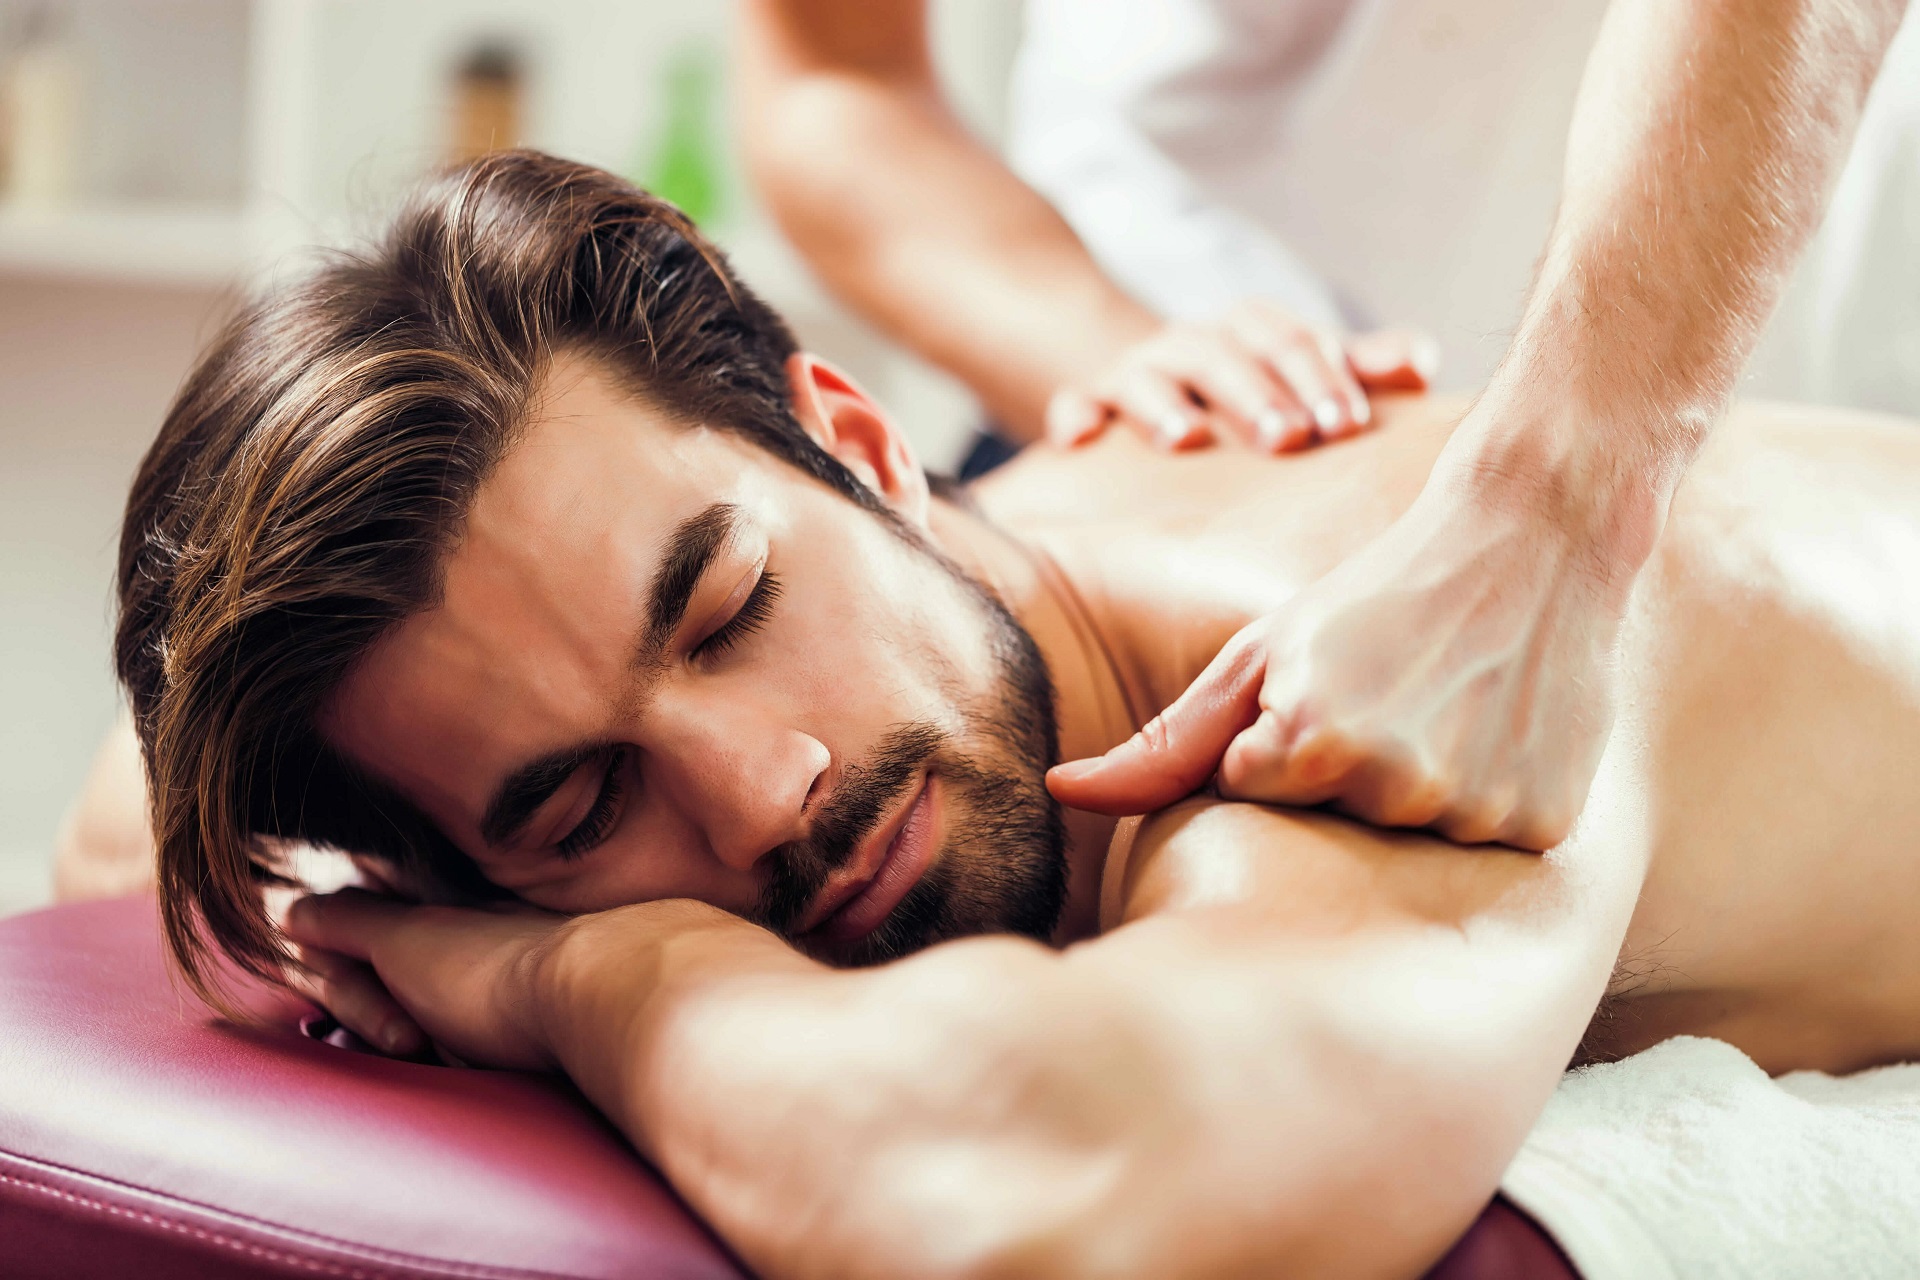 Markus massage. Мужской массаж. Спа для мужчин. Массаж спины мужчине. Спа массаж для мужчин.